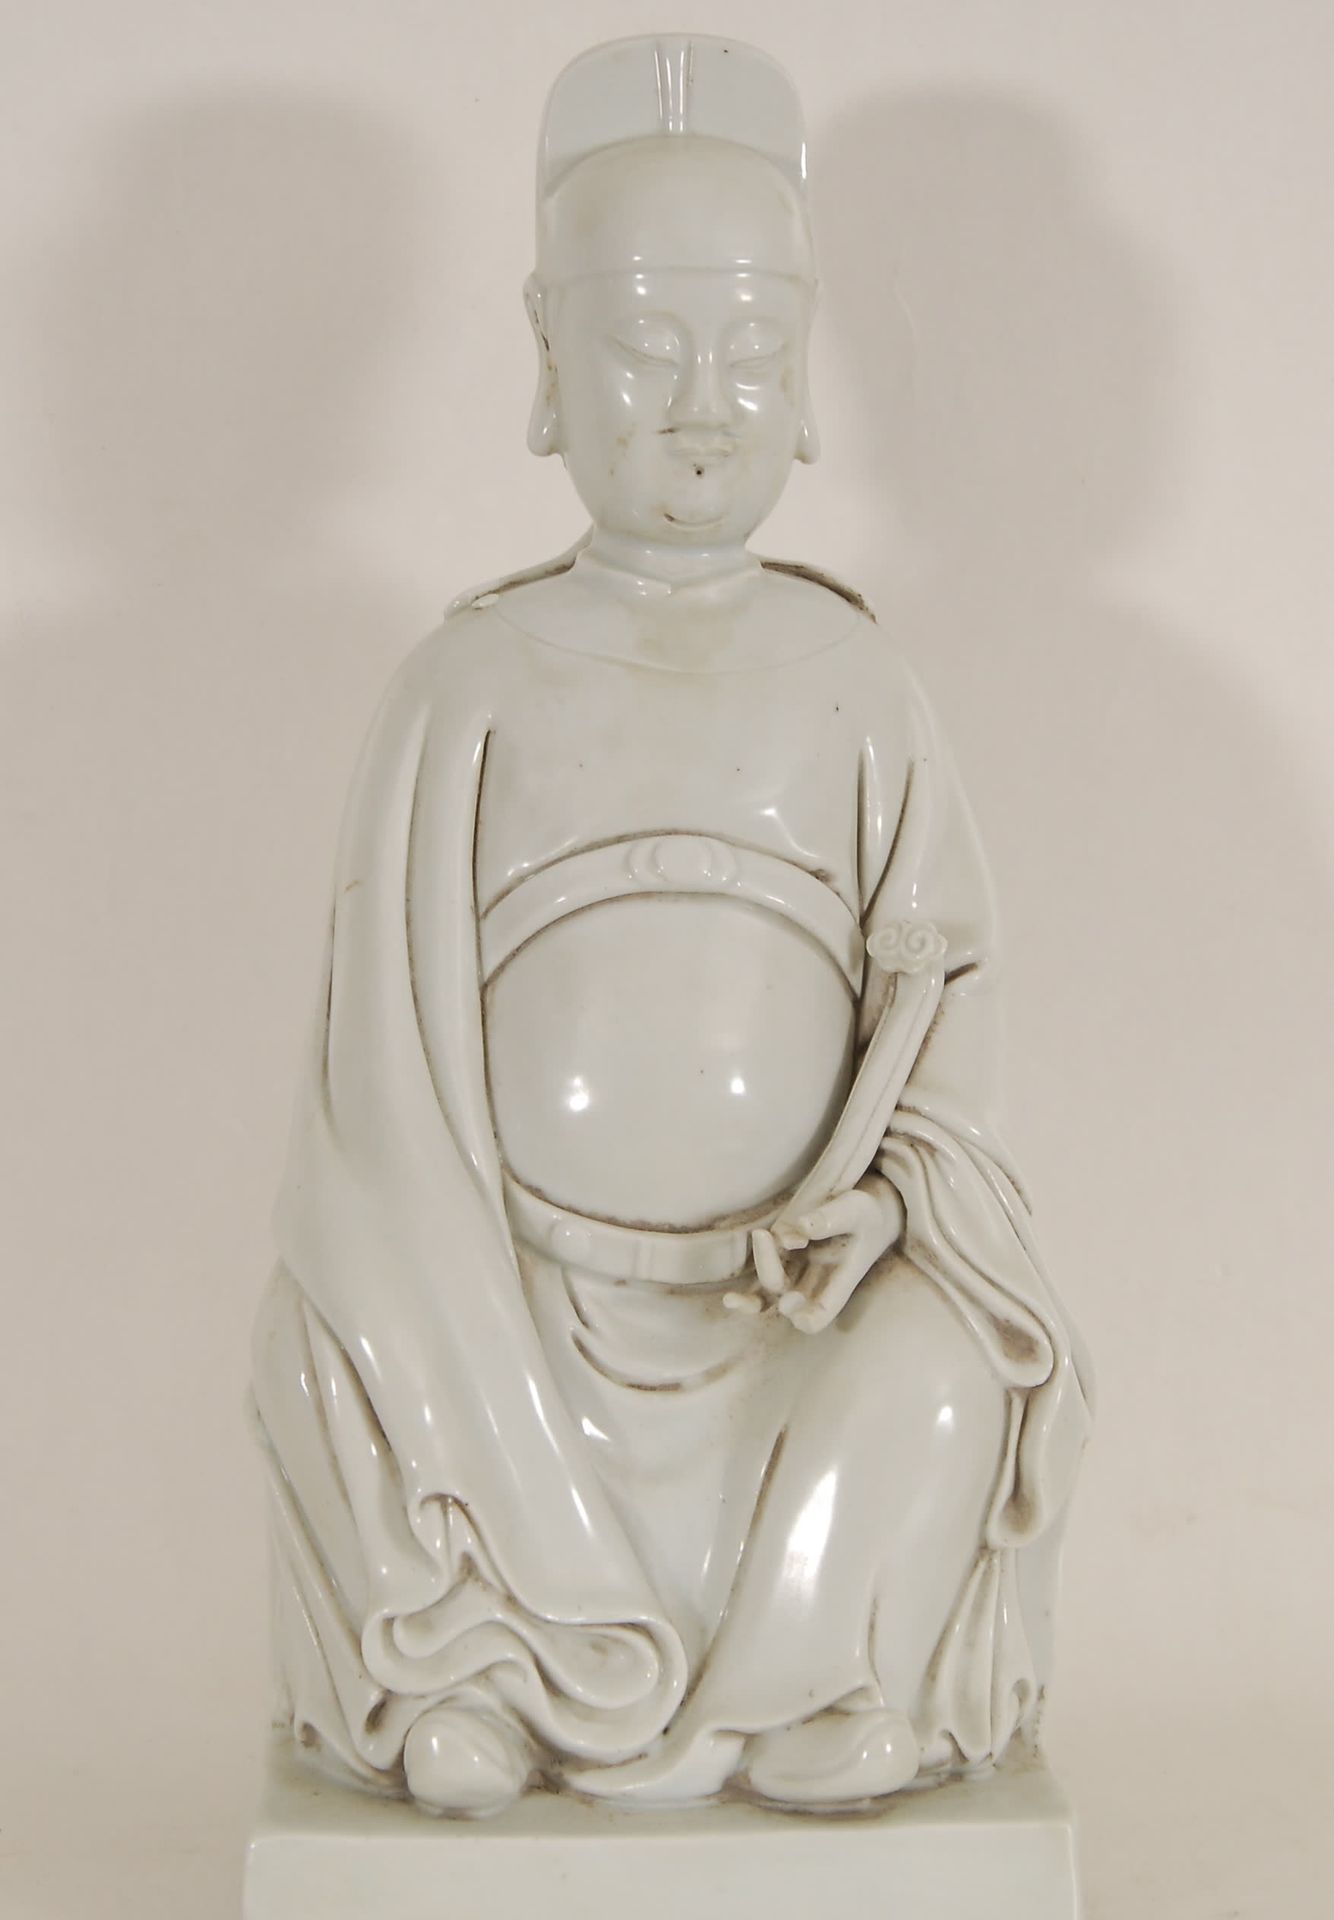 Null Bouddha
Blanc de Chine. Dehua (small damages).
H. 31,5 cm.